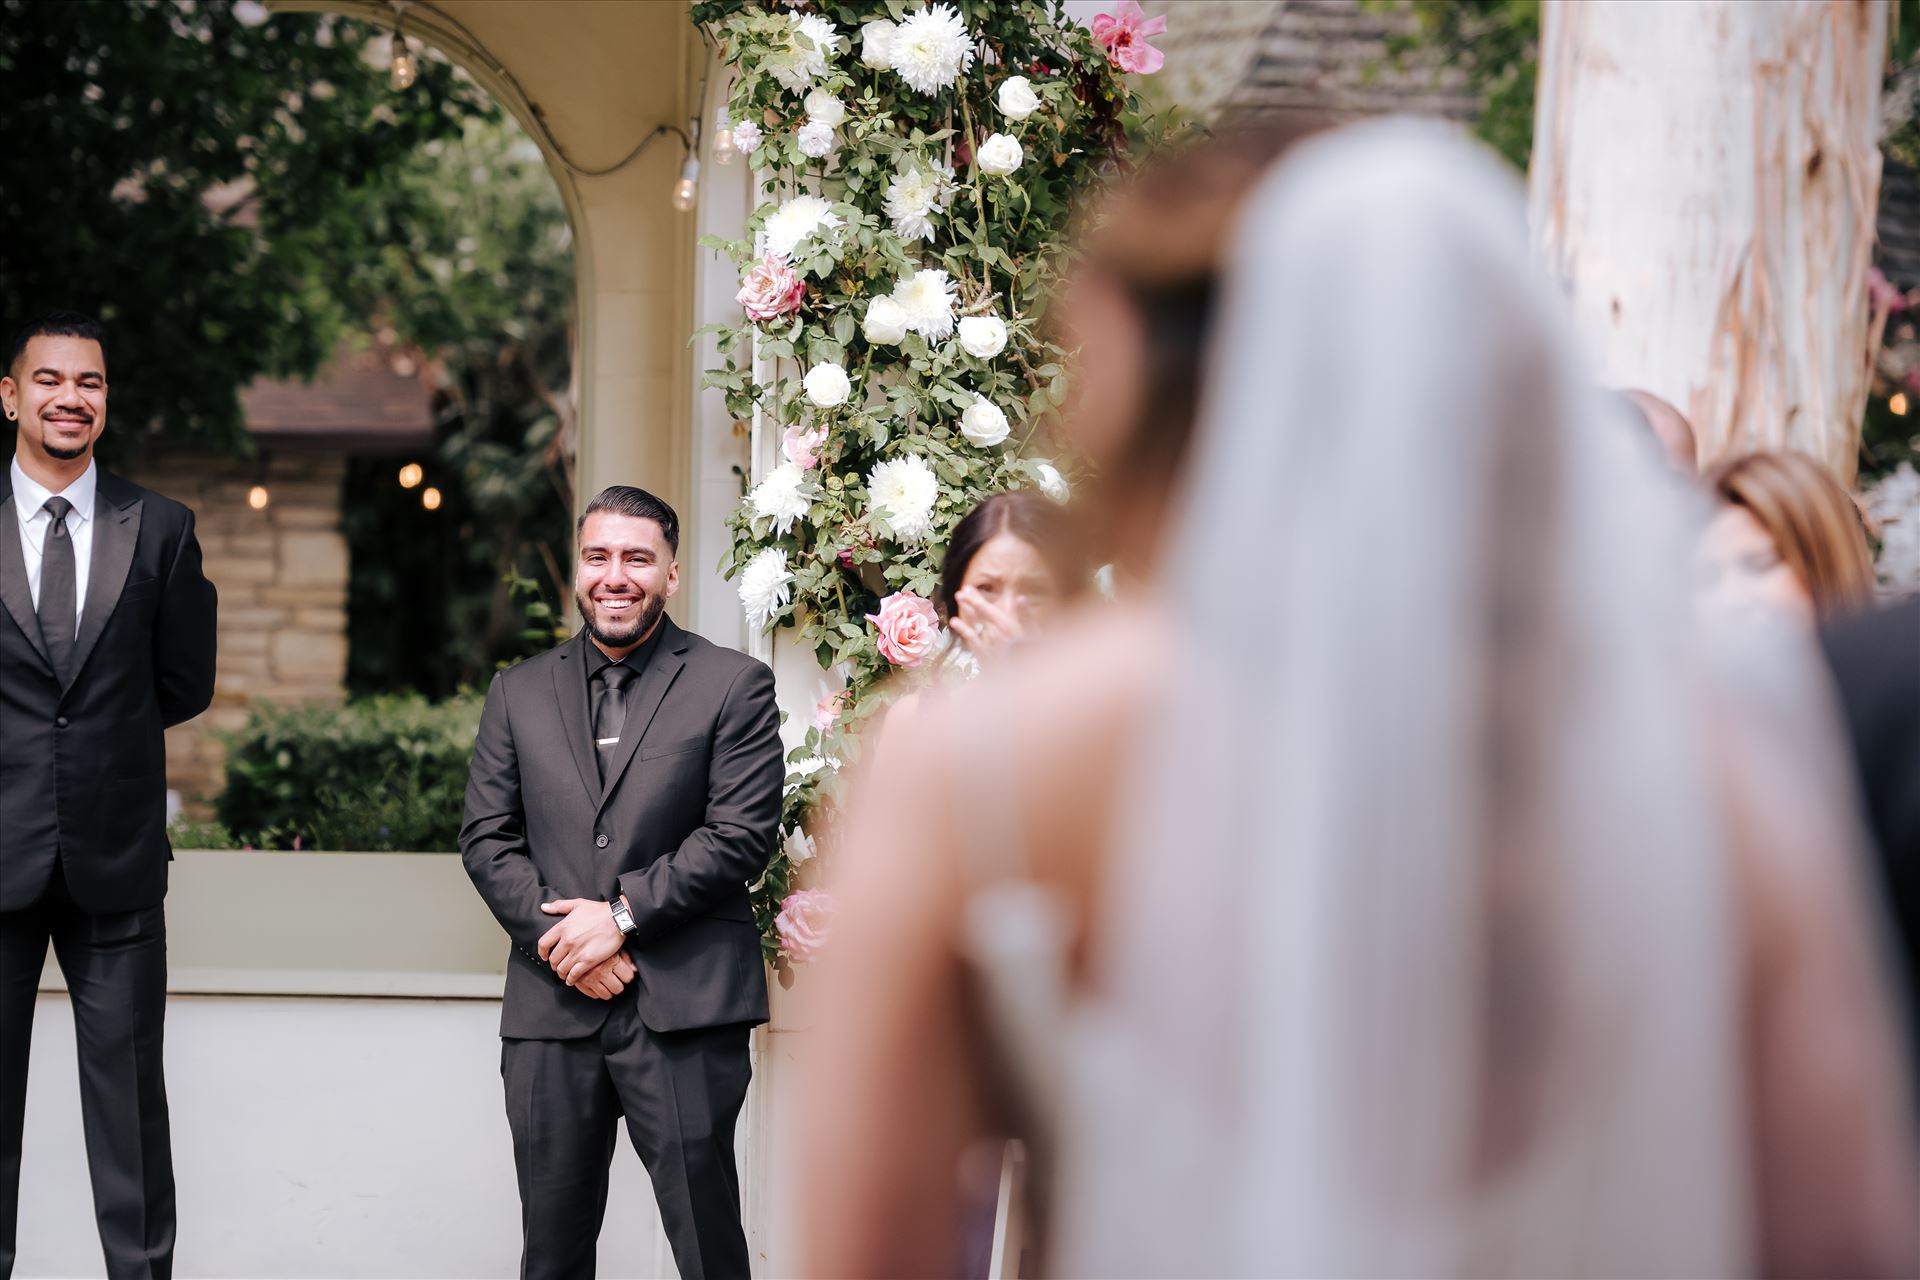 Final-2907.JPG - Mirror's Edge Photography San Luis Obispo and Santa Barbara County Wedding Photographer. Kaleidoscope Inn and Gardens Wedding. Groom's first look at bride by Sarah Williams